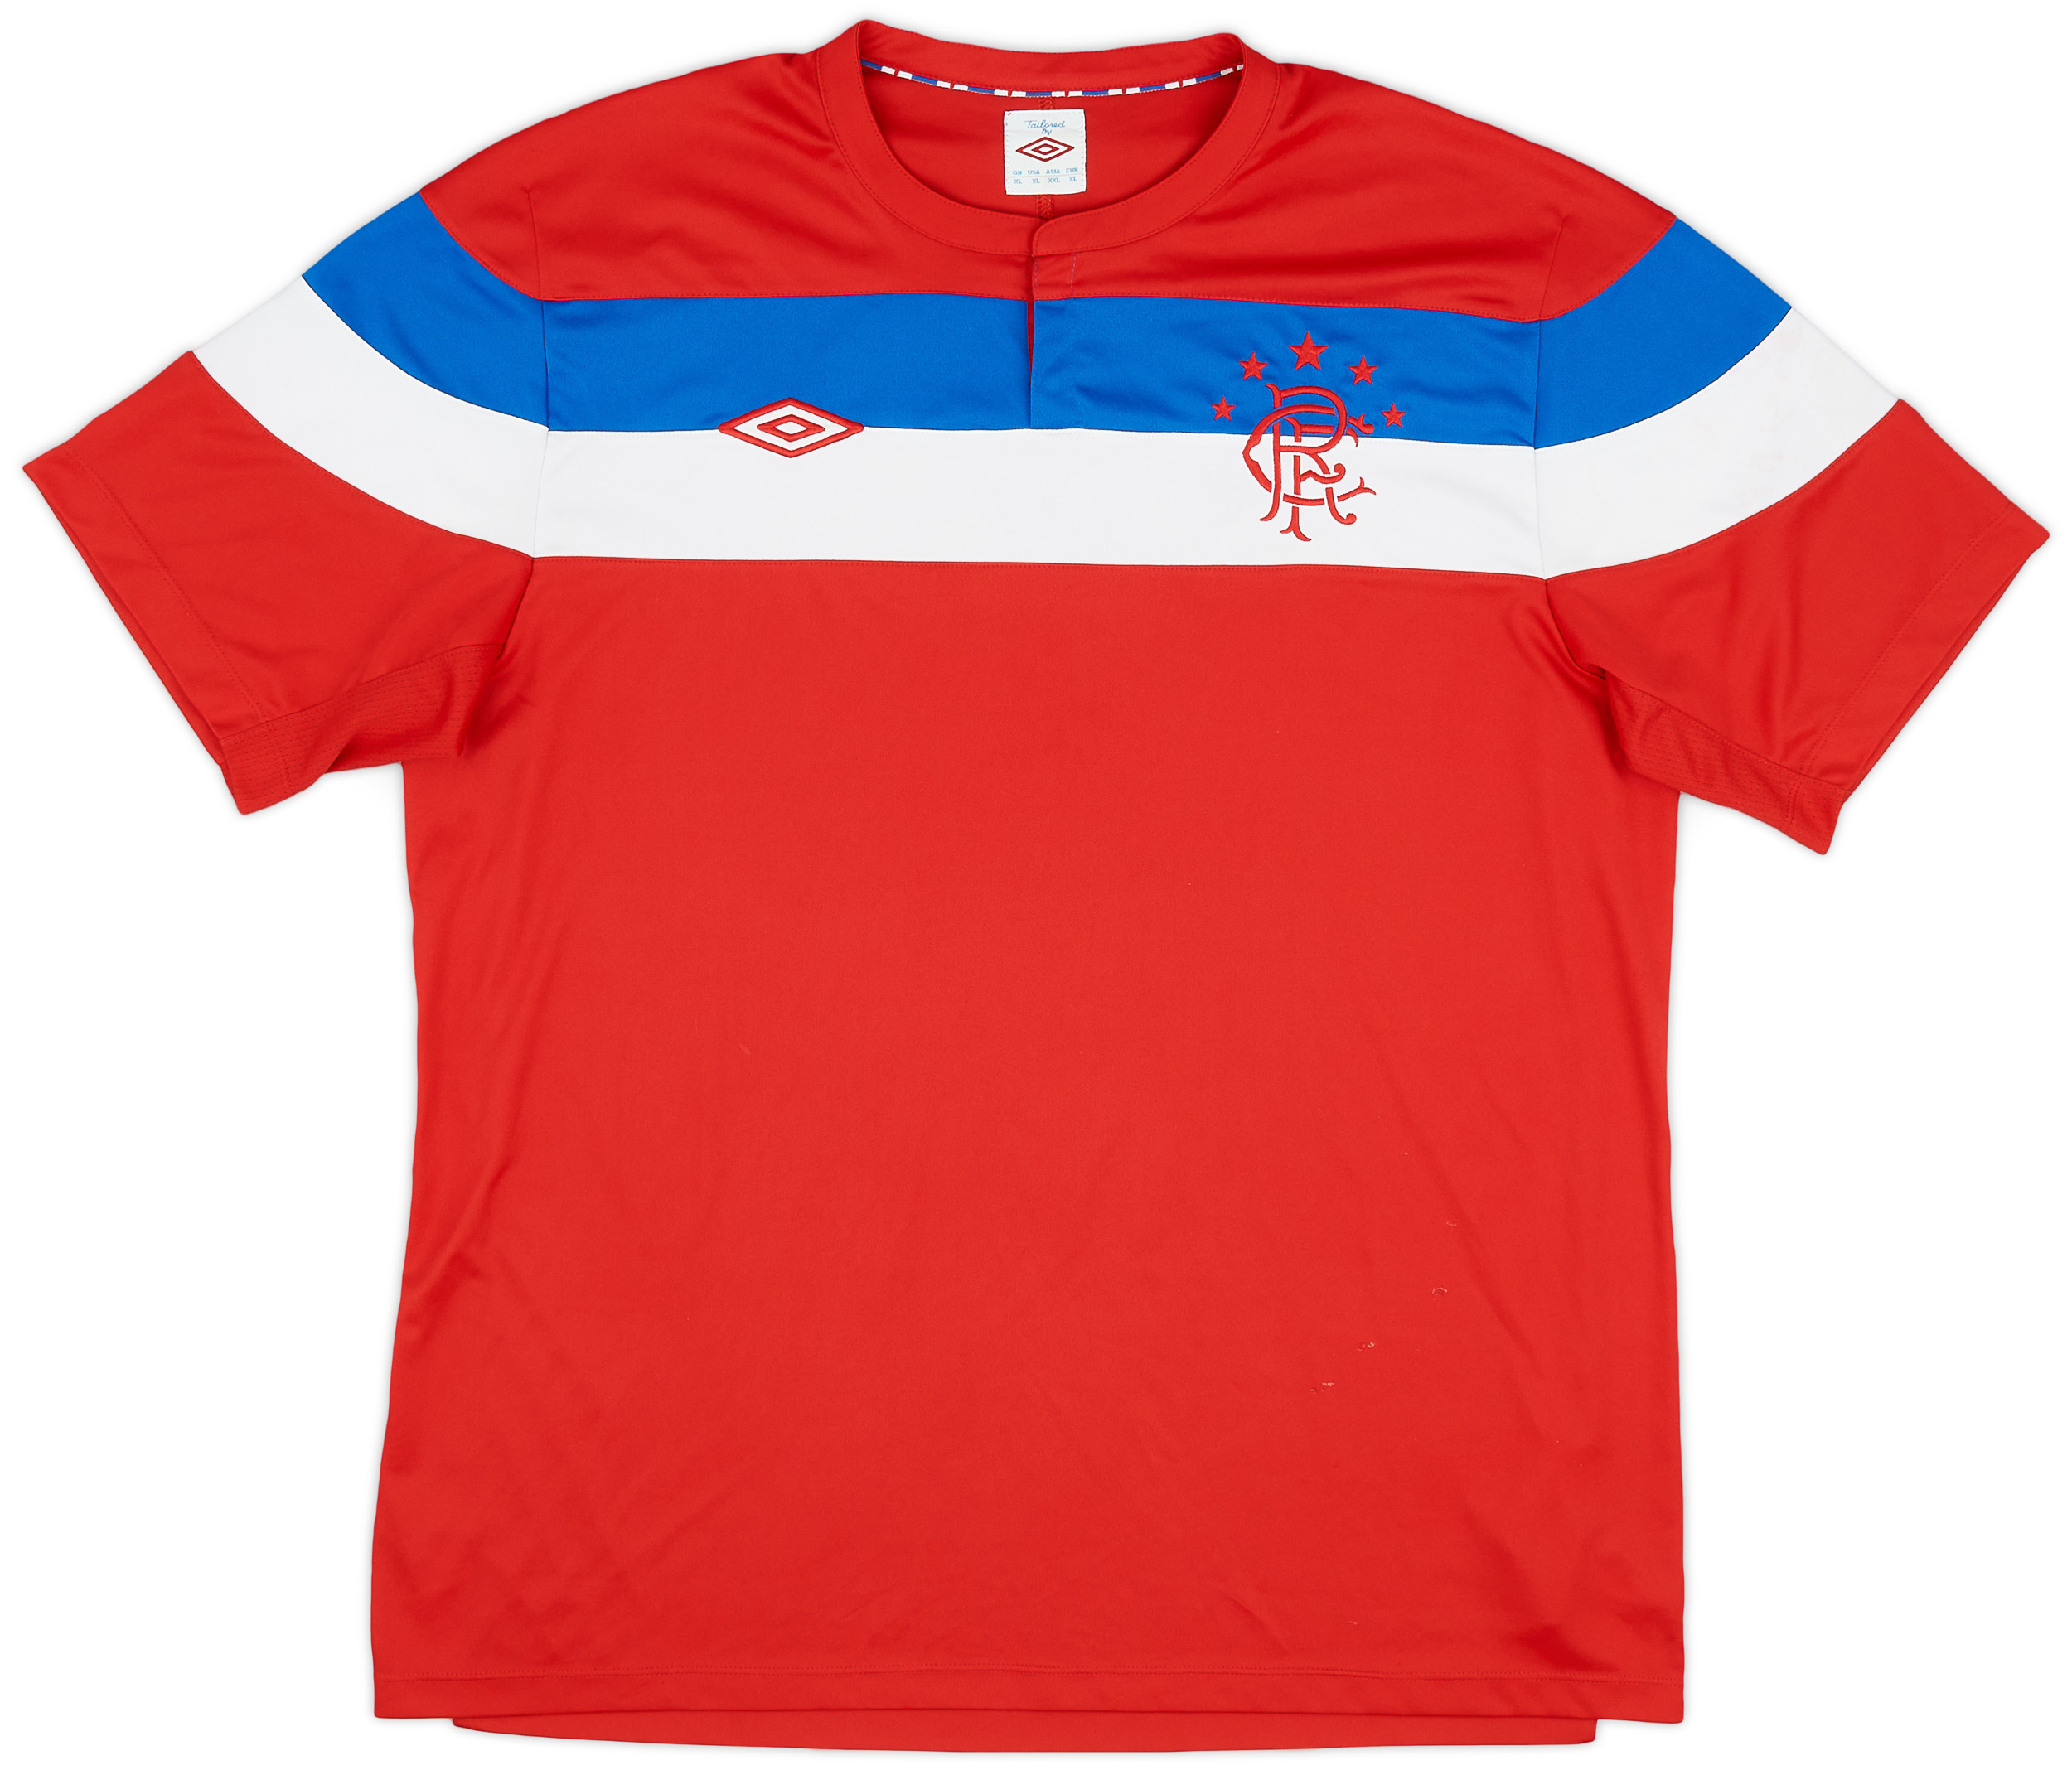 Retro Rangers Shirt